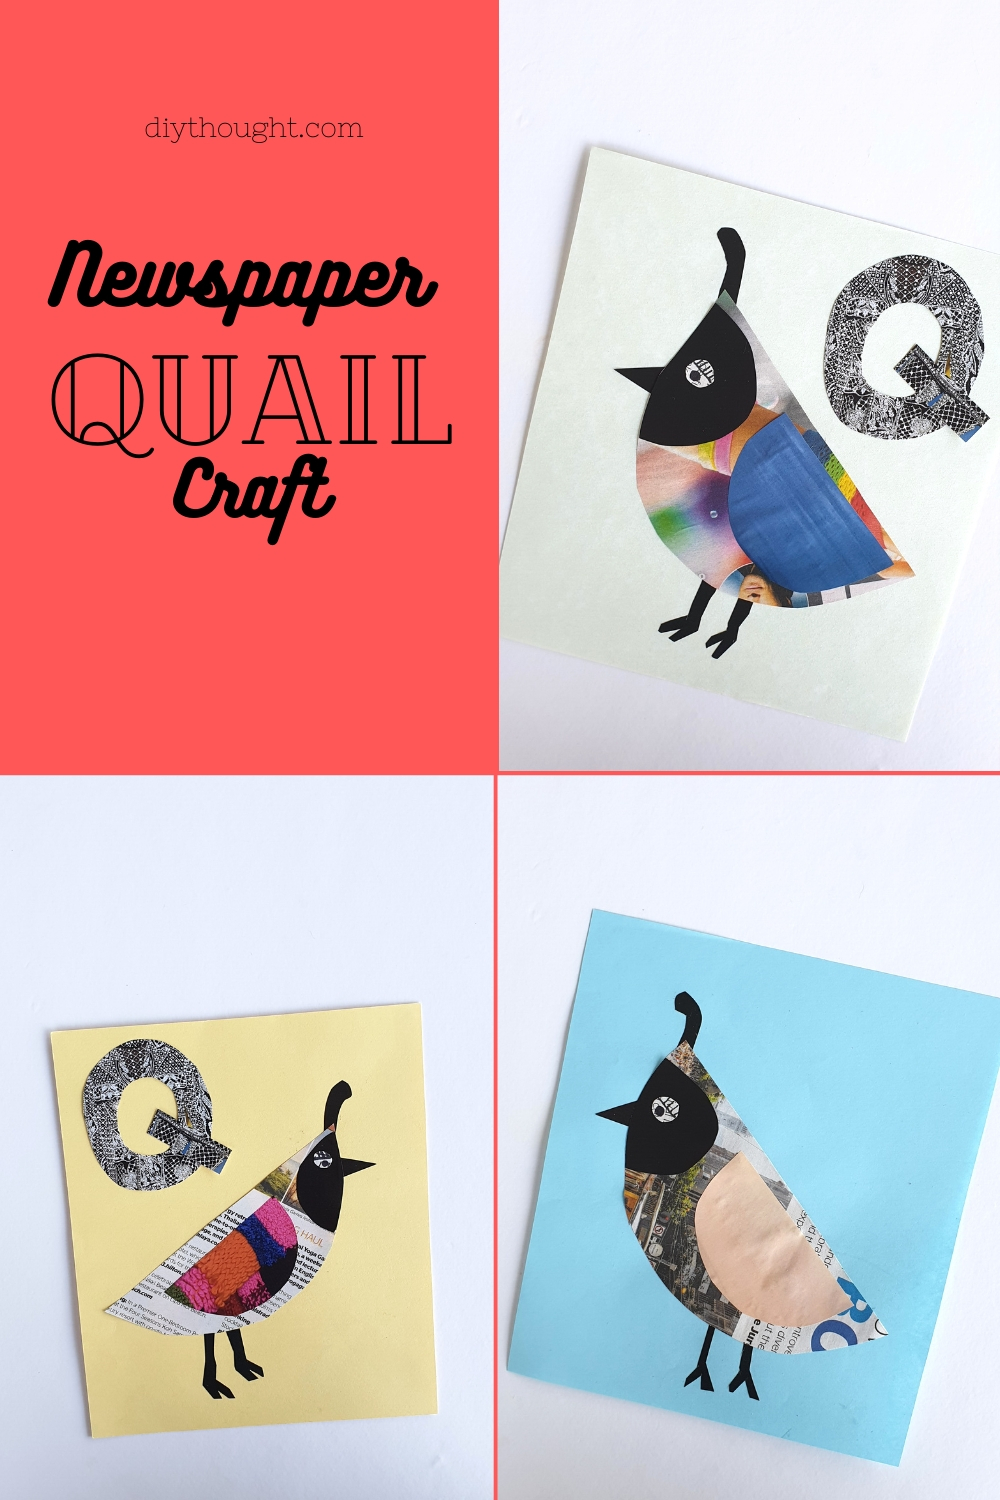 Newspaper quail craft